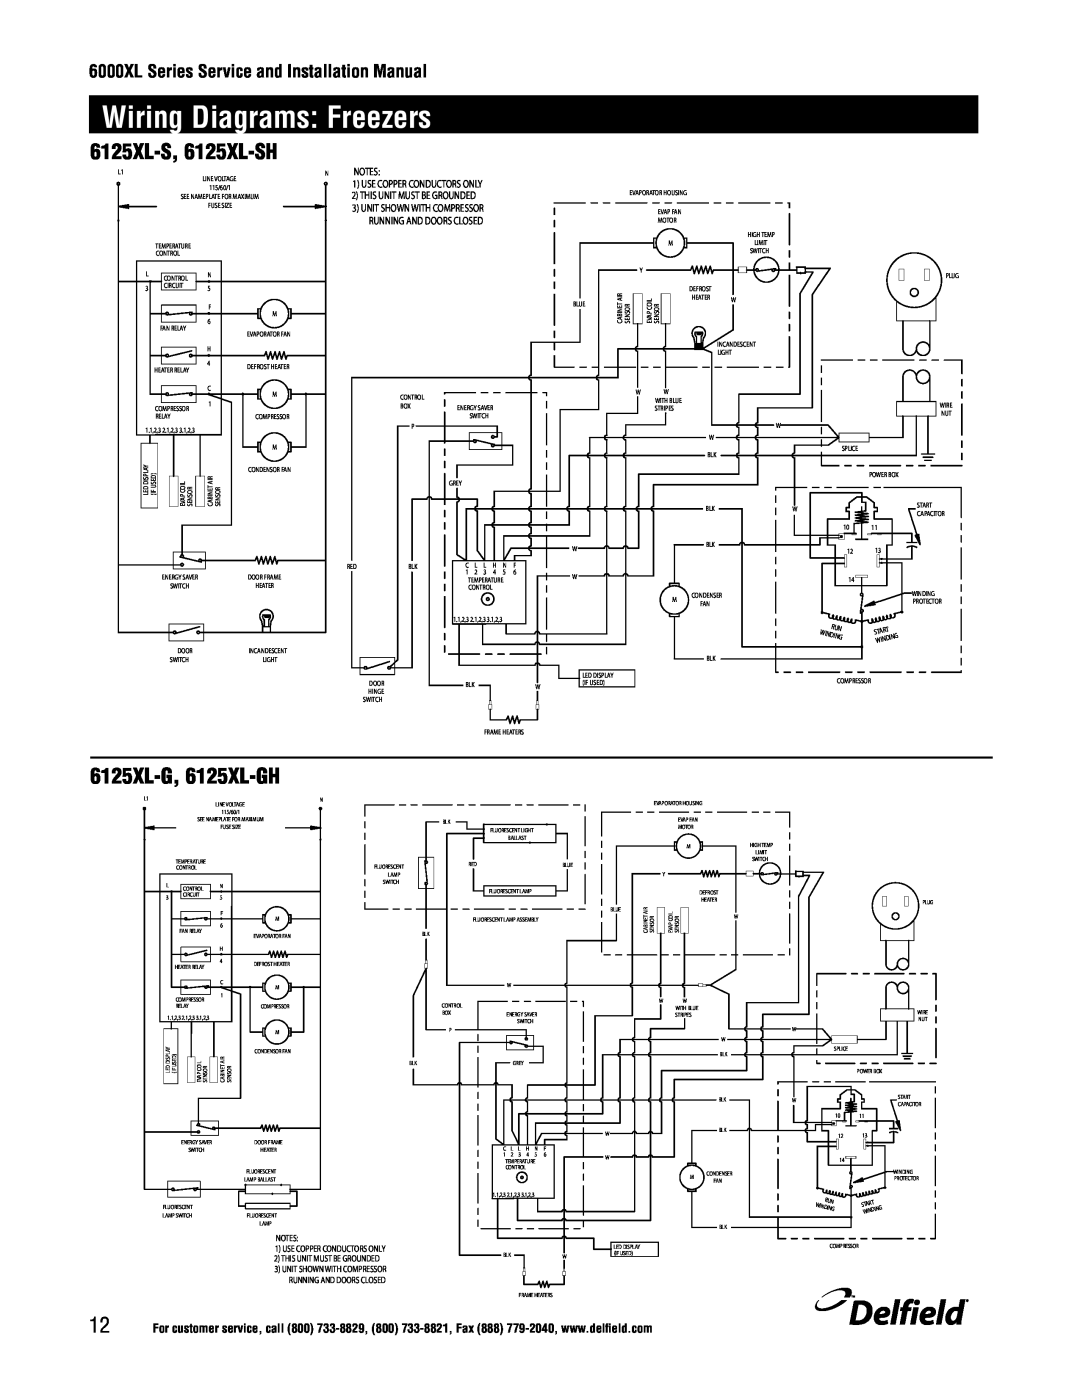 Delfield 6100XL manual Wiring Diagrams: Freezers, 6125XL-G, 6125XL-GH, 6125XL-S, 6125XL-SH, Delfield, Nnotes 